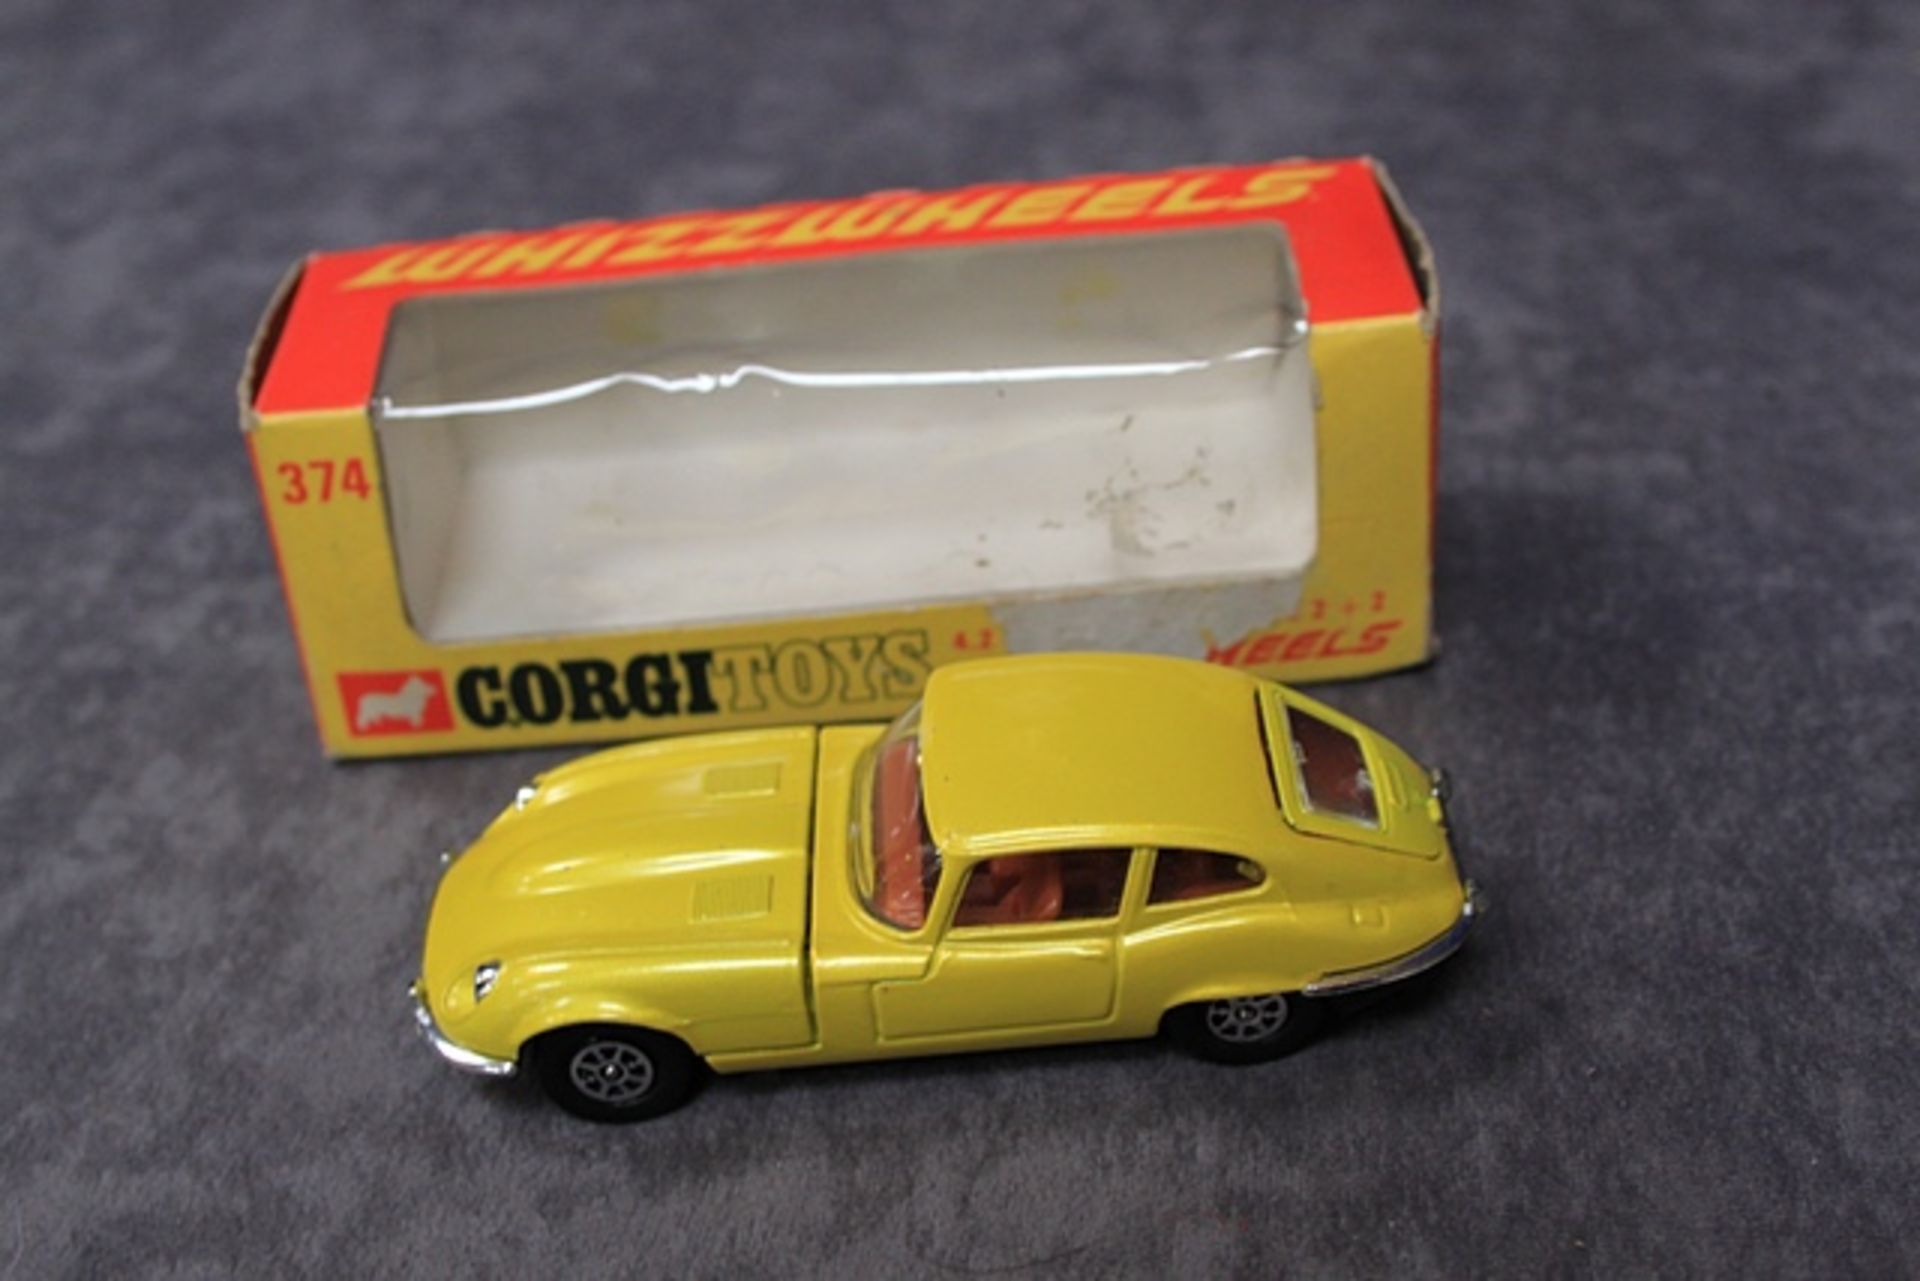 Corgi Whizzwheels Diecast Number 374 4.2 Litre Jaguar 'E' Type 2+2 With Excellent Box - Image 3 of 4